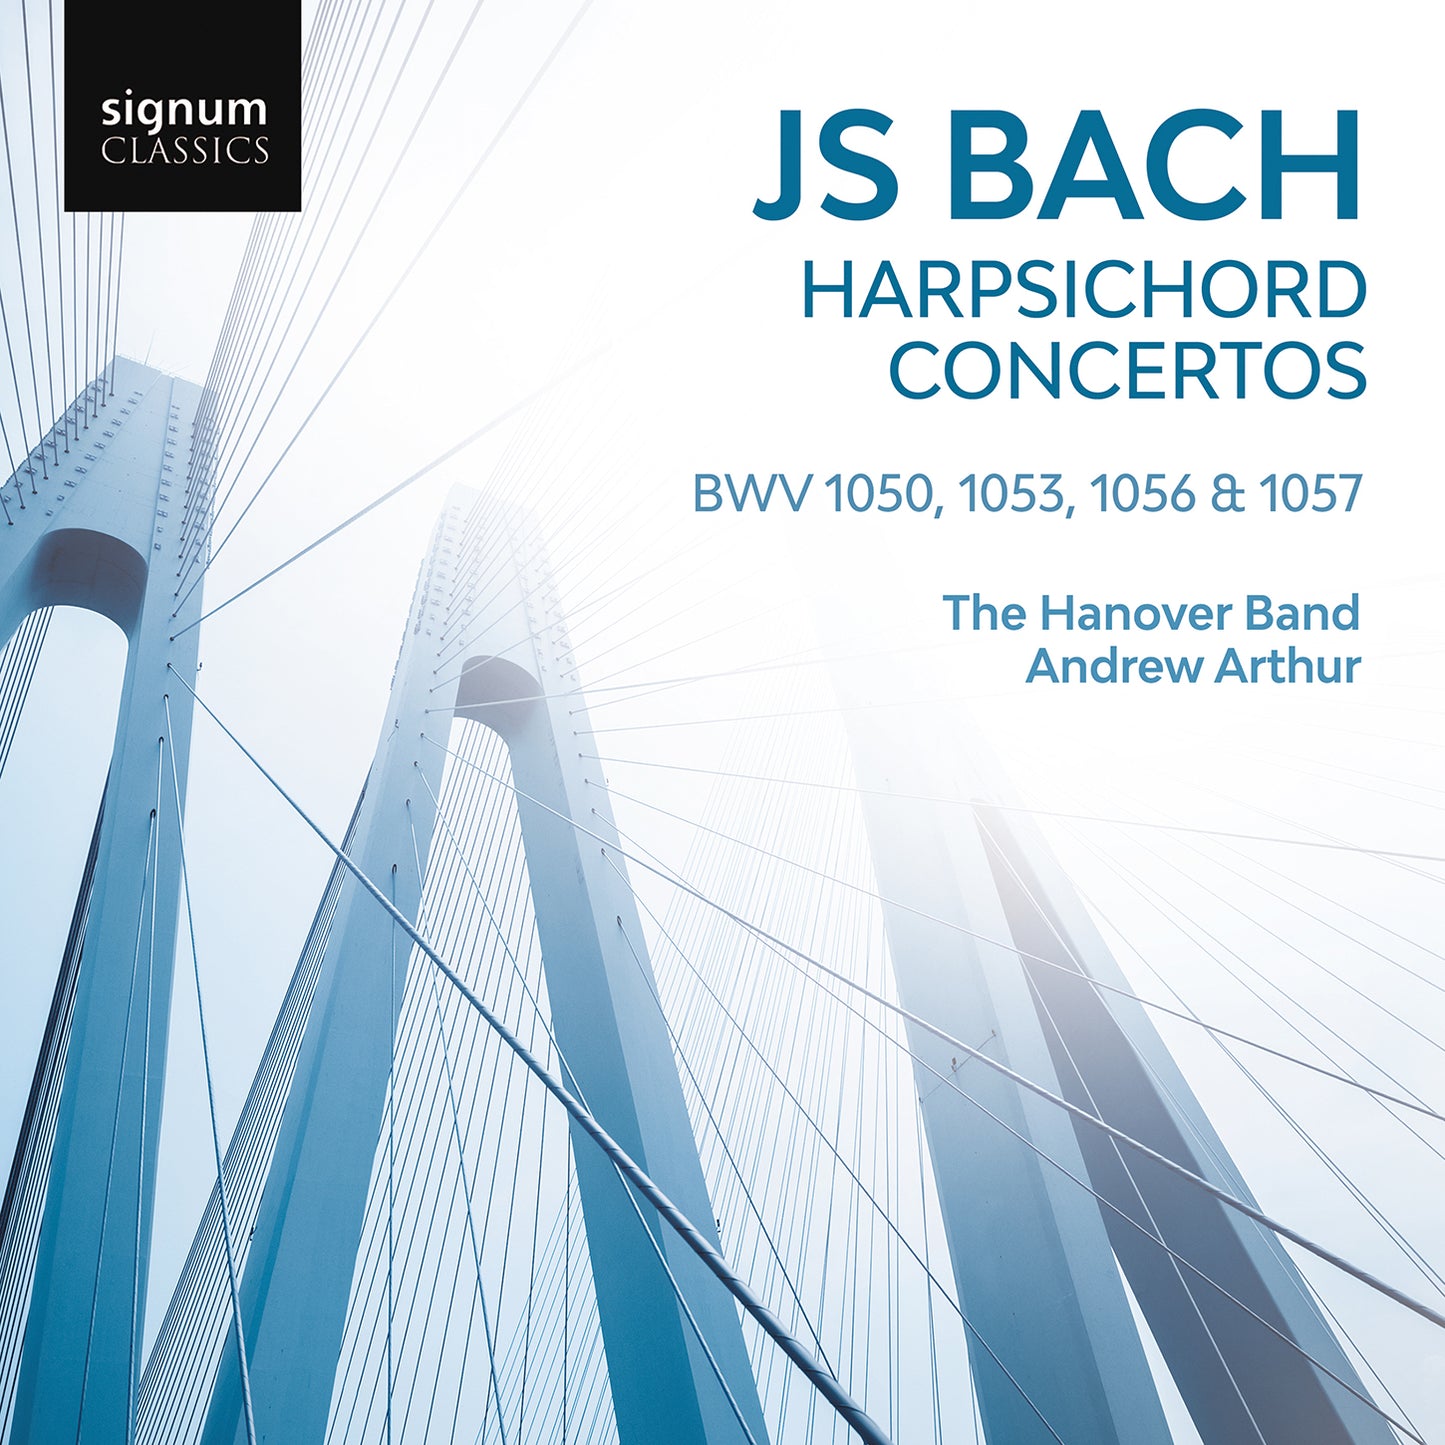 J.S. Bach: Harpsichord Concertos, BWV 1050, 1053, 1056 & 1057